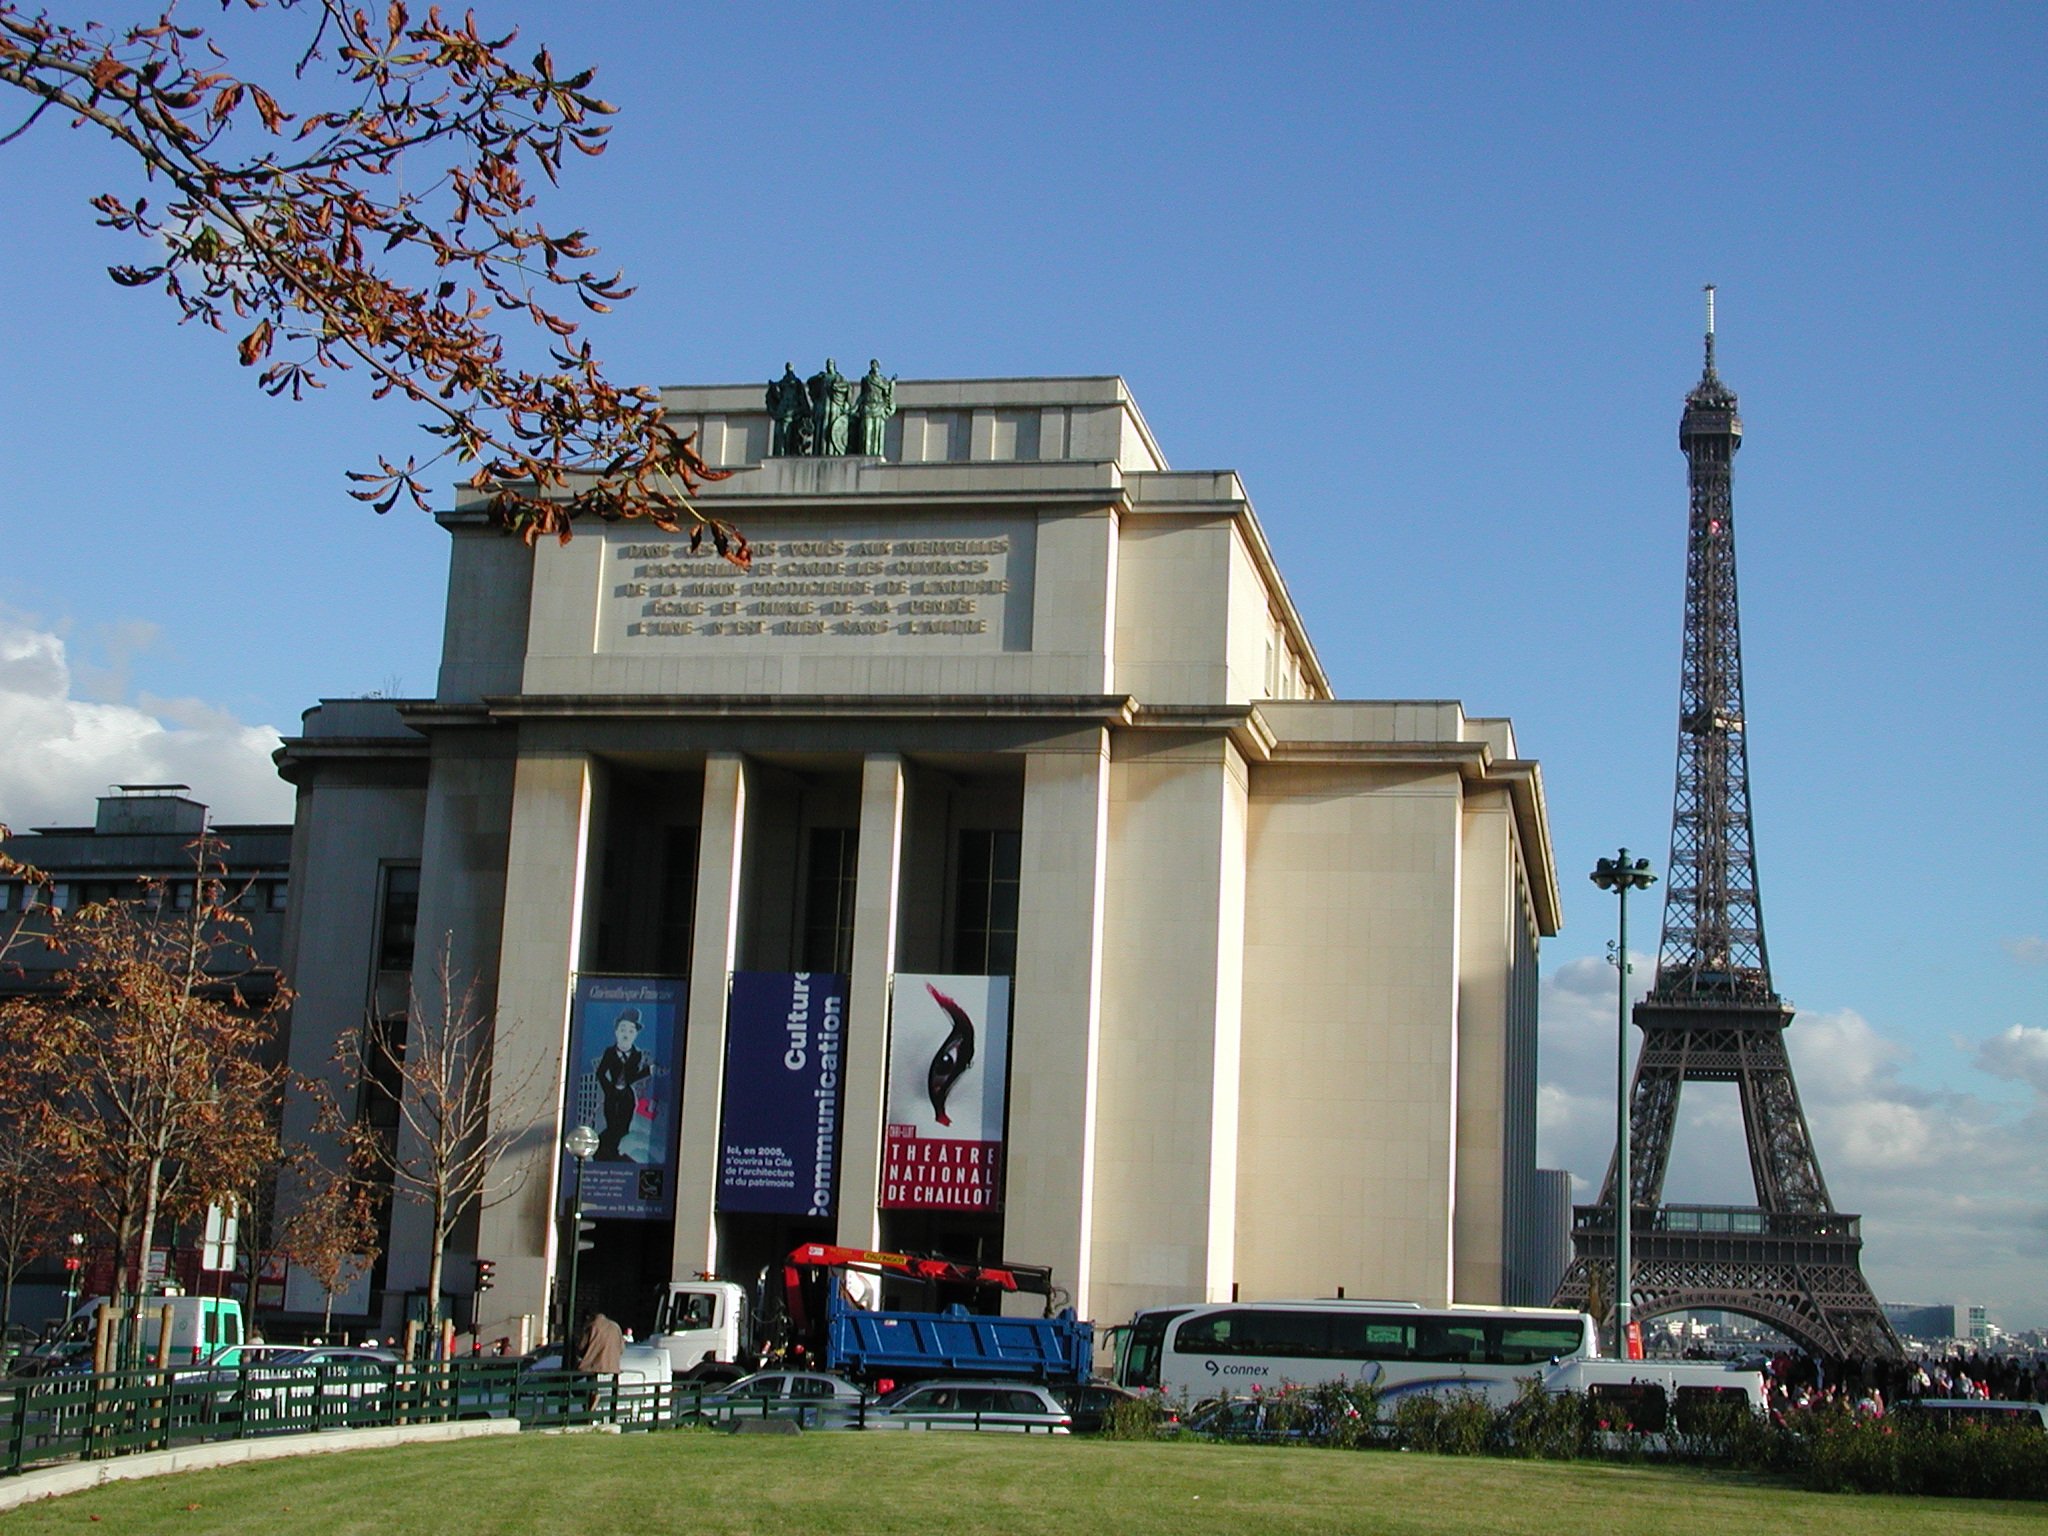 Exterior view of the Palais de Chaillot building